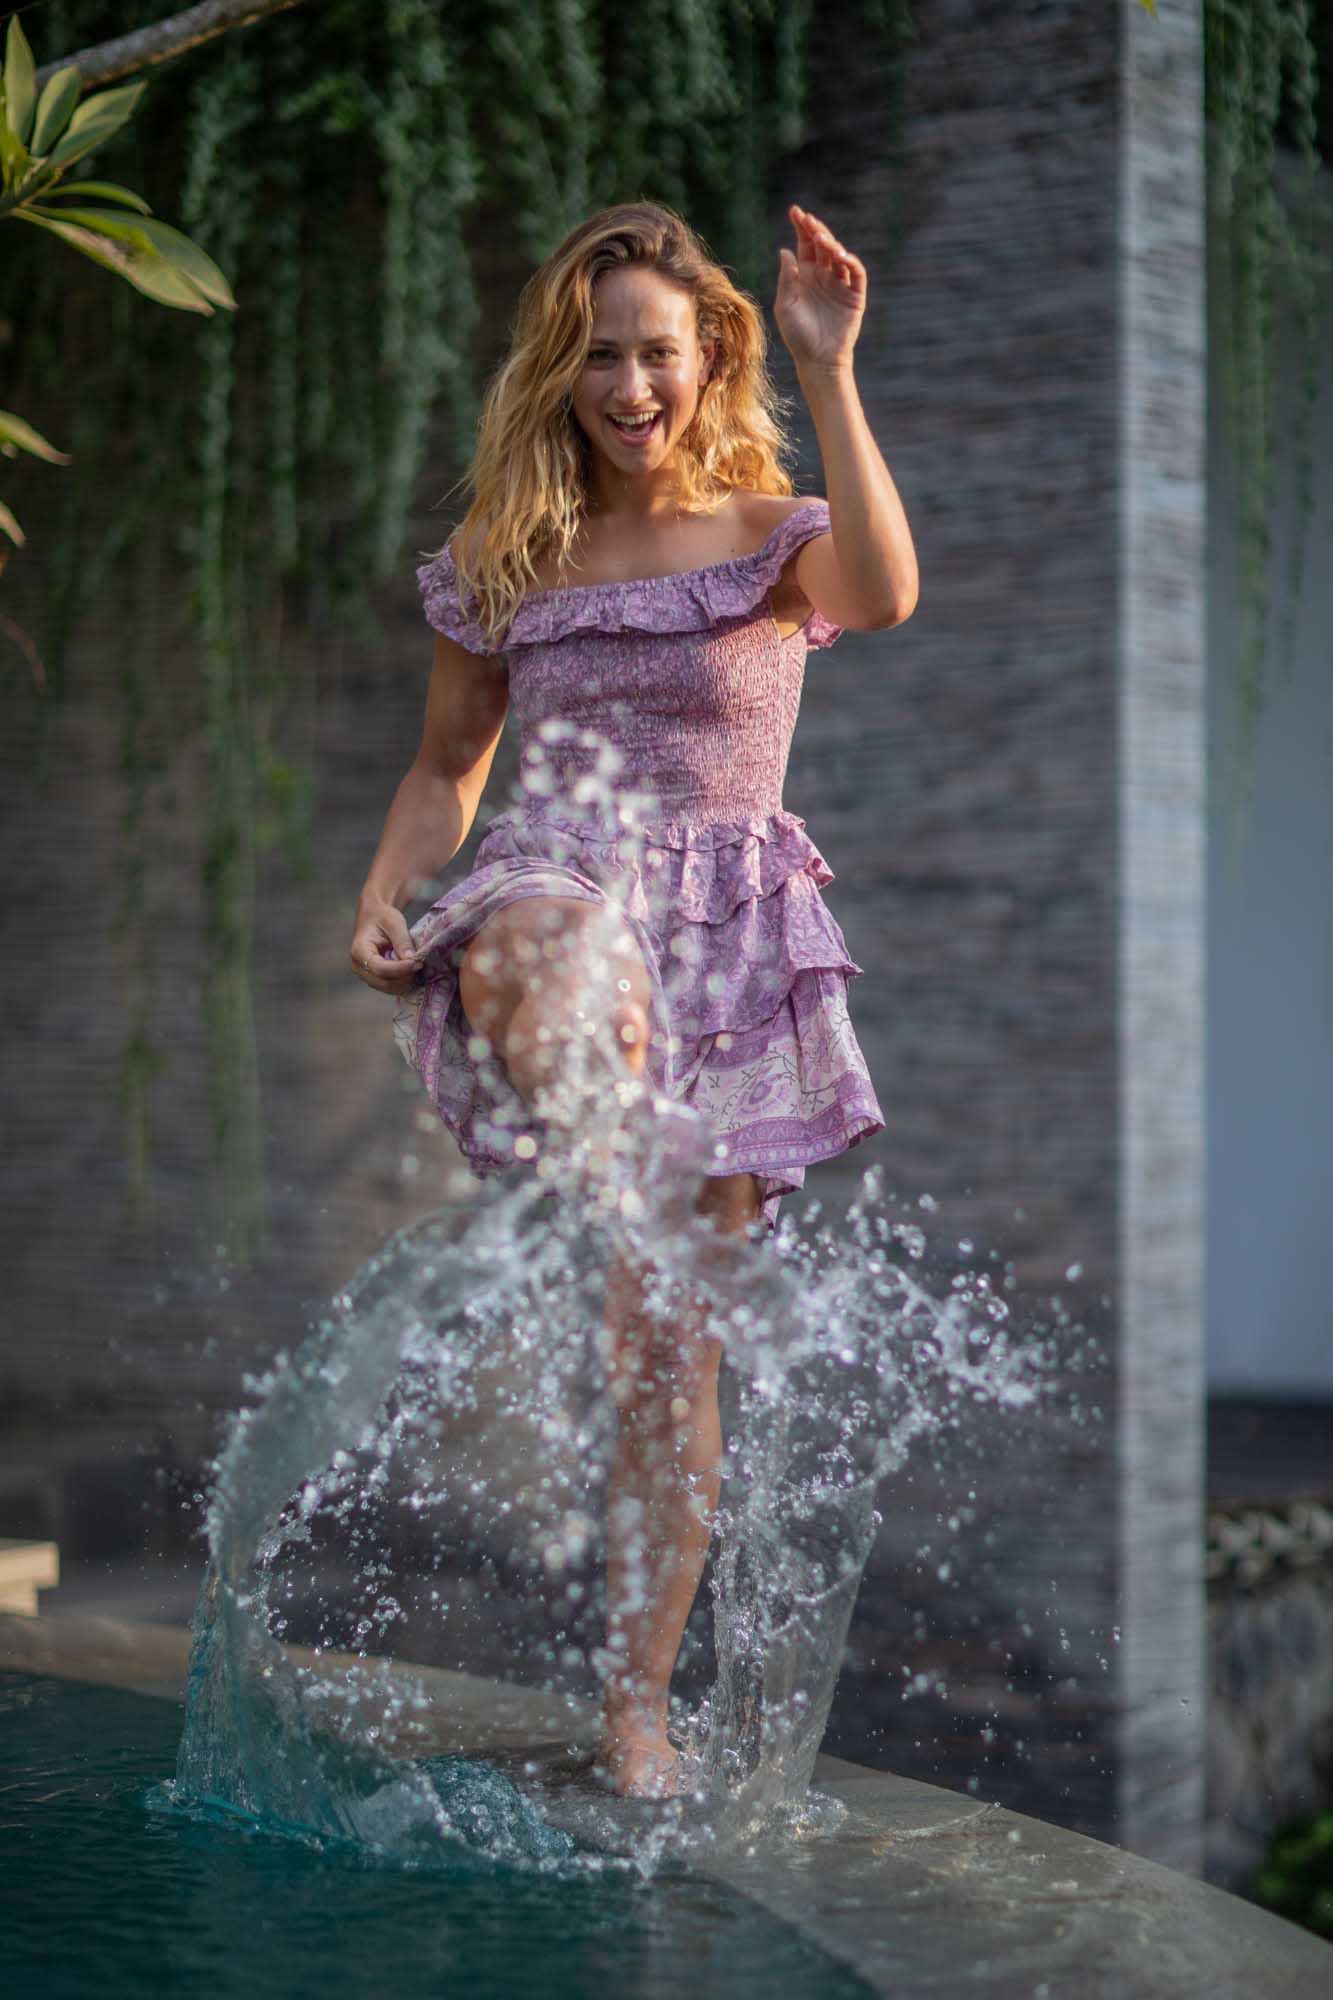 Beautiful blonde woman playfully kicks water at the camer on the edge of pool | Canggu Bali Indonesia | Toraja Villa | Lifestyle Photography | Fashion Photography | Travel Photography 